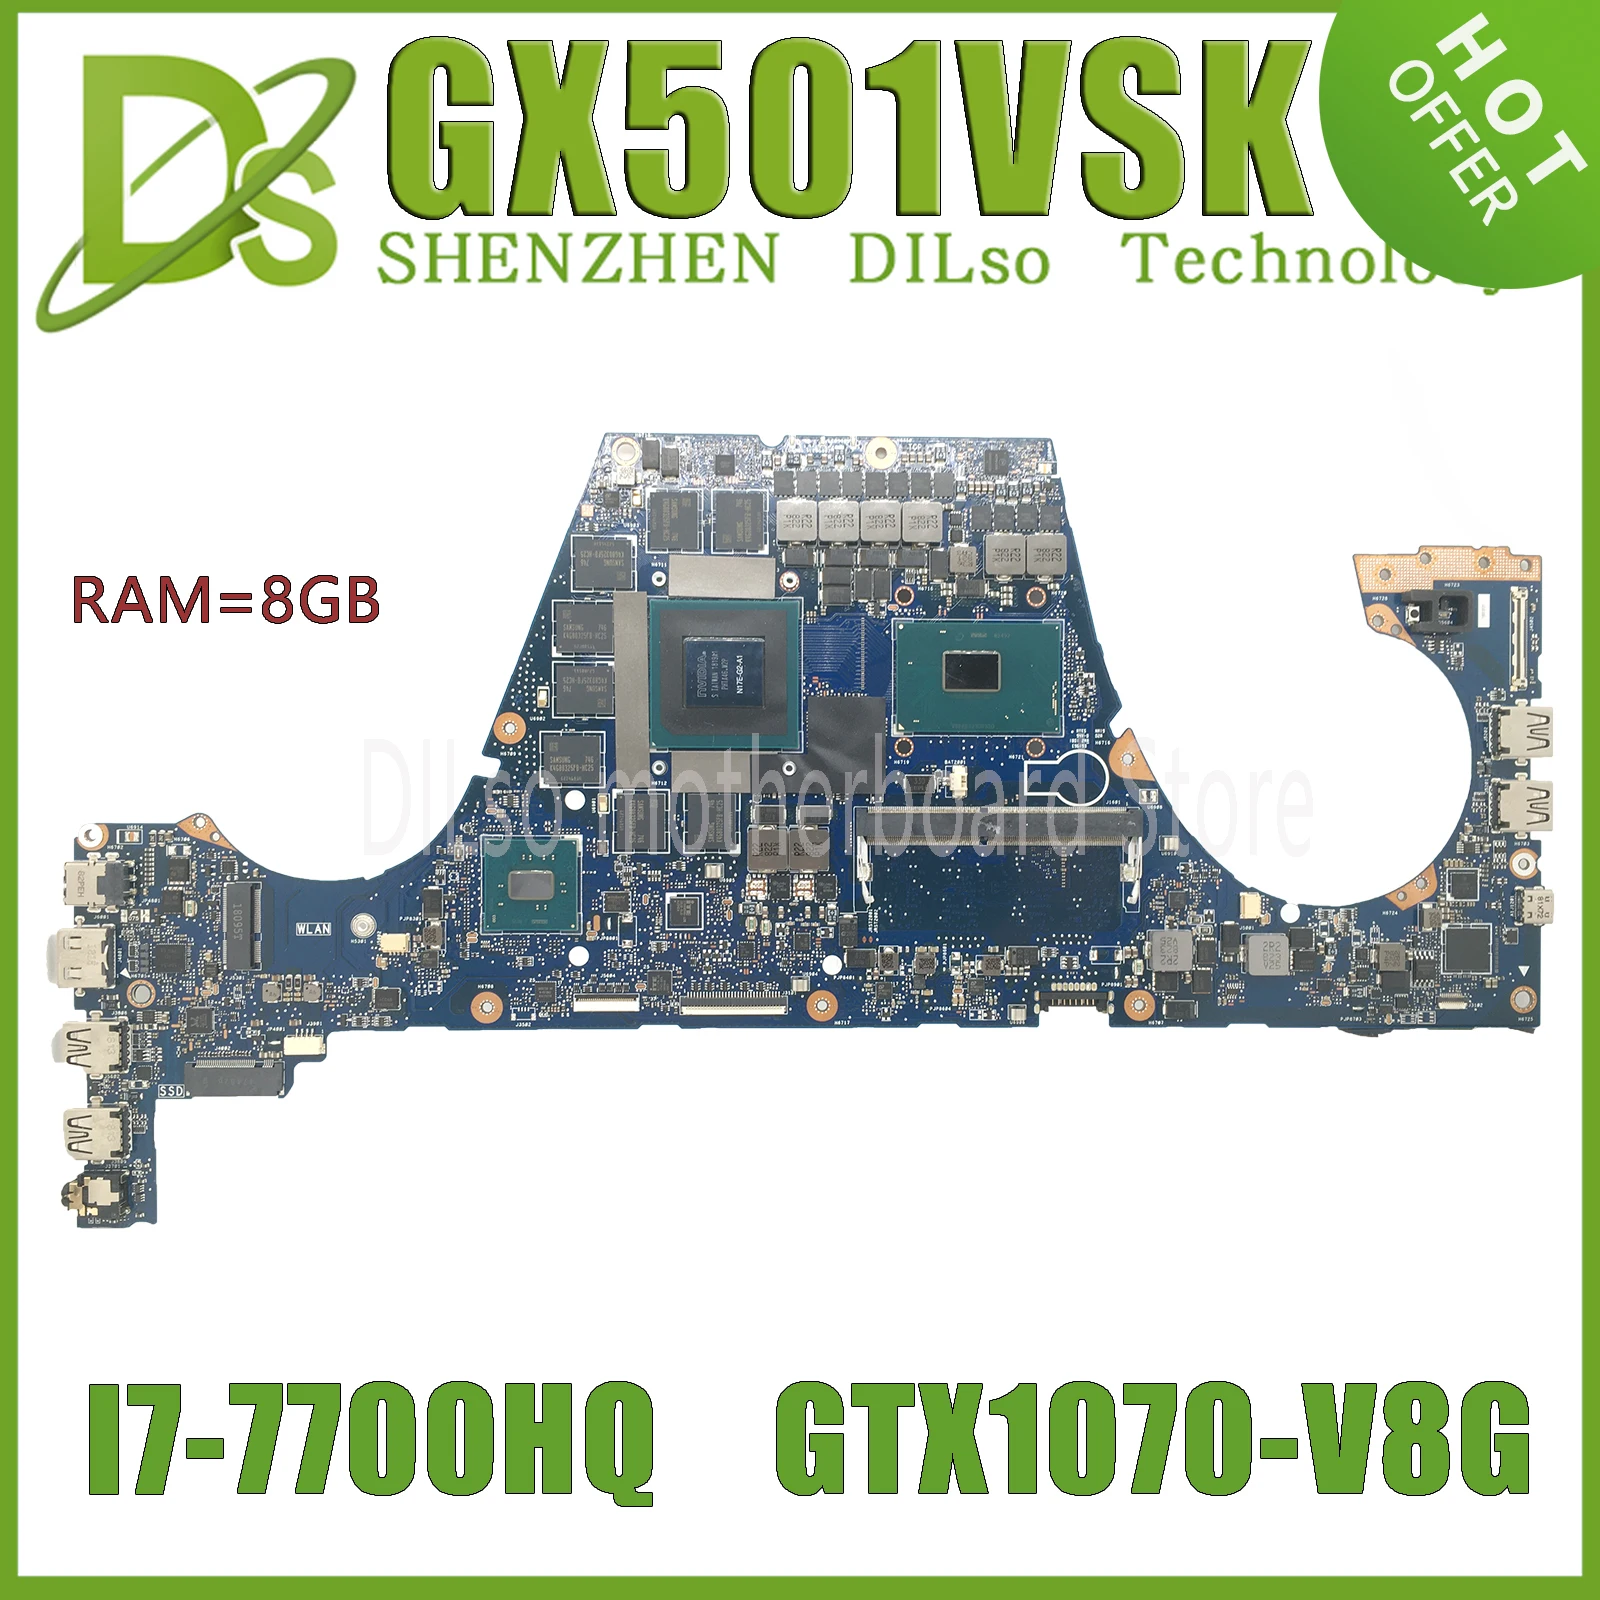 

KEFU GX501VSK материнская плата для ноутбука ASUS Zephyrus GX501V GX501 GX501VI GX501VIK материнская плата I7-7700HQ GTX1070 GTX1080/V8G 8G/RAM